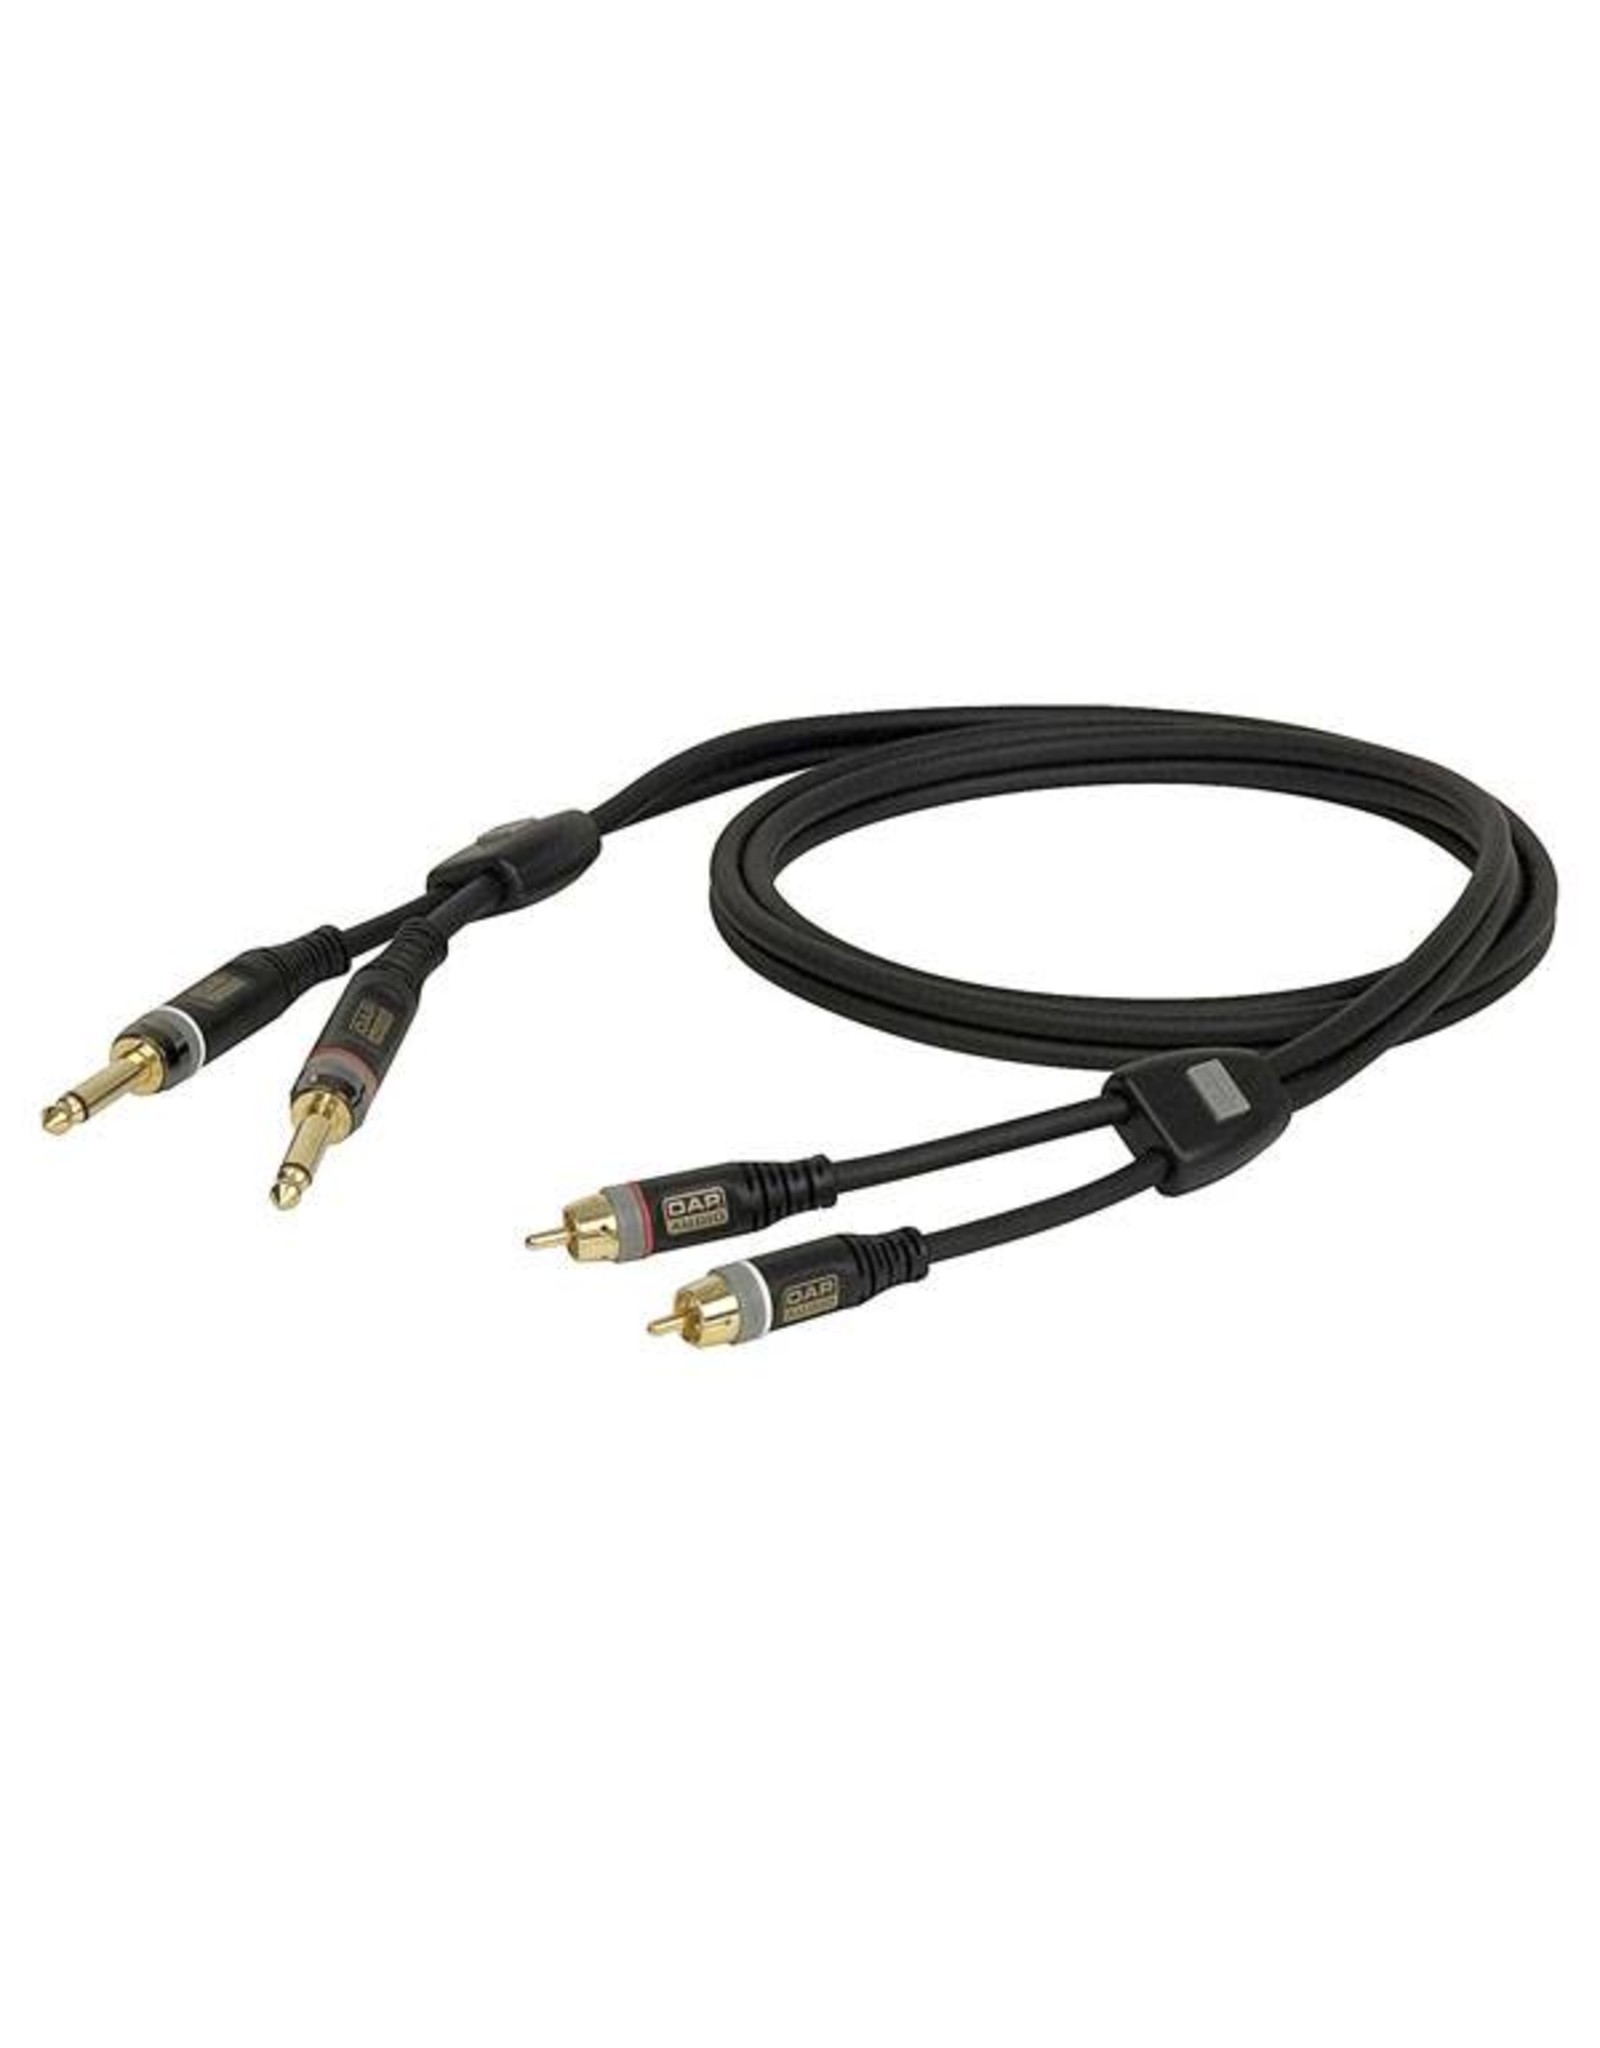 DAP audio pro DAP-Audio XGL115 - 2 x jack to 2 x RCA Male